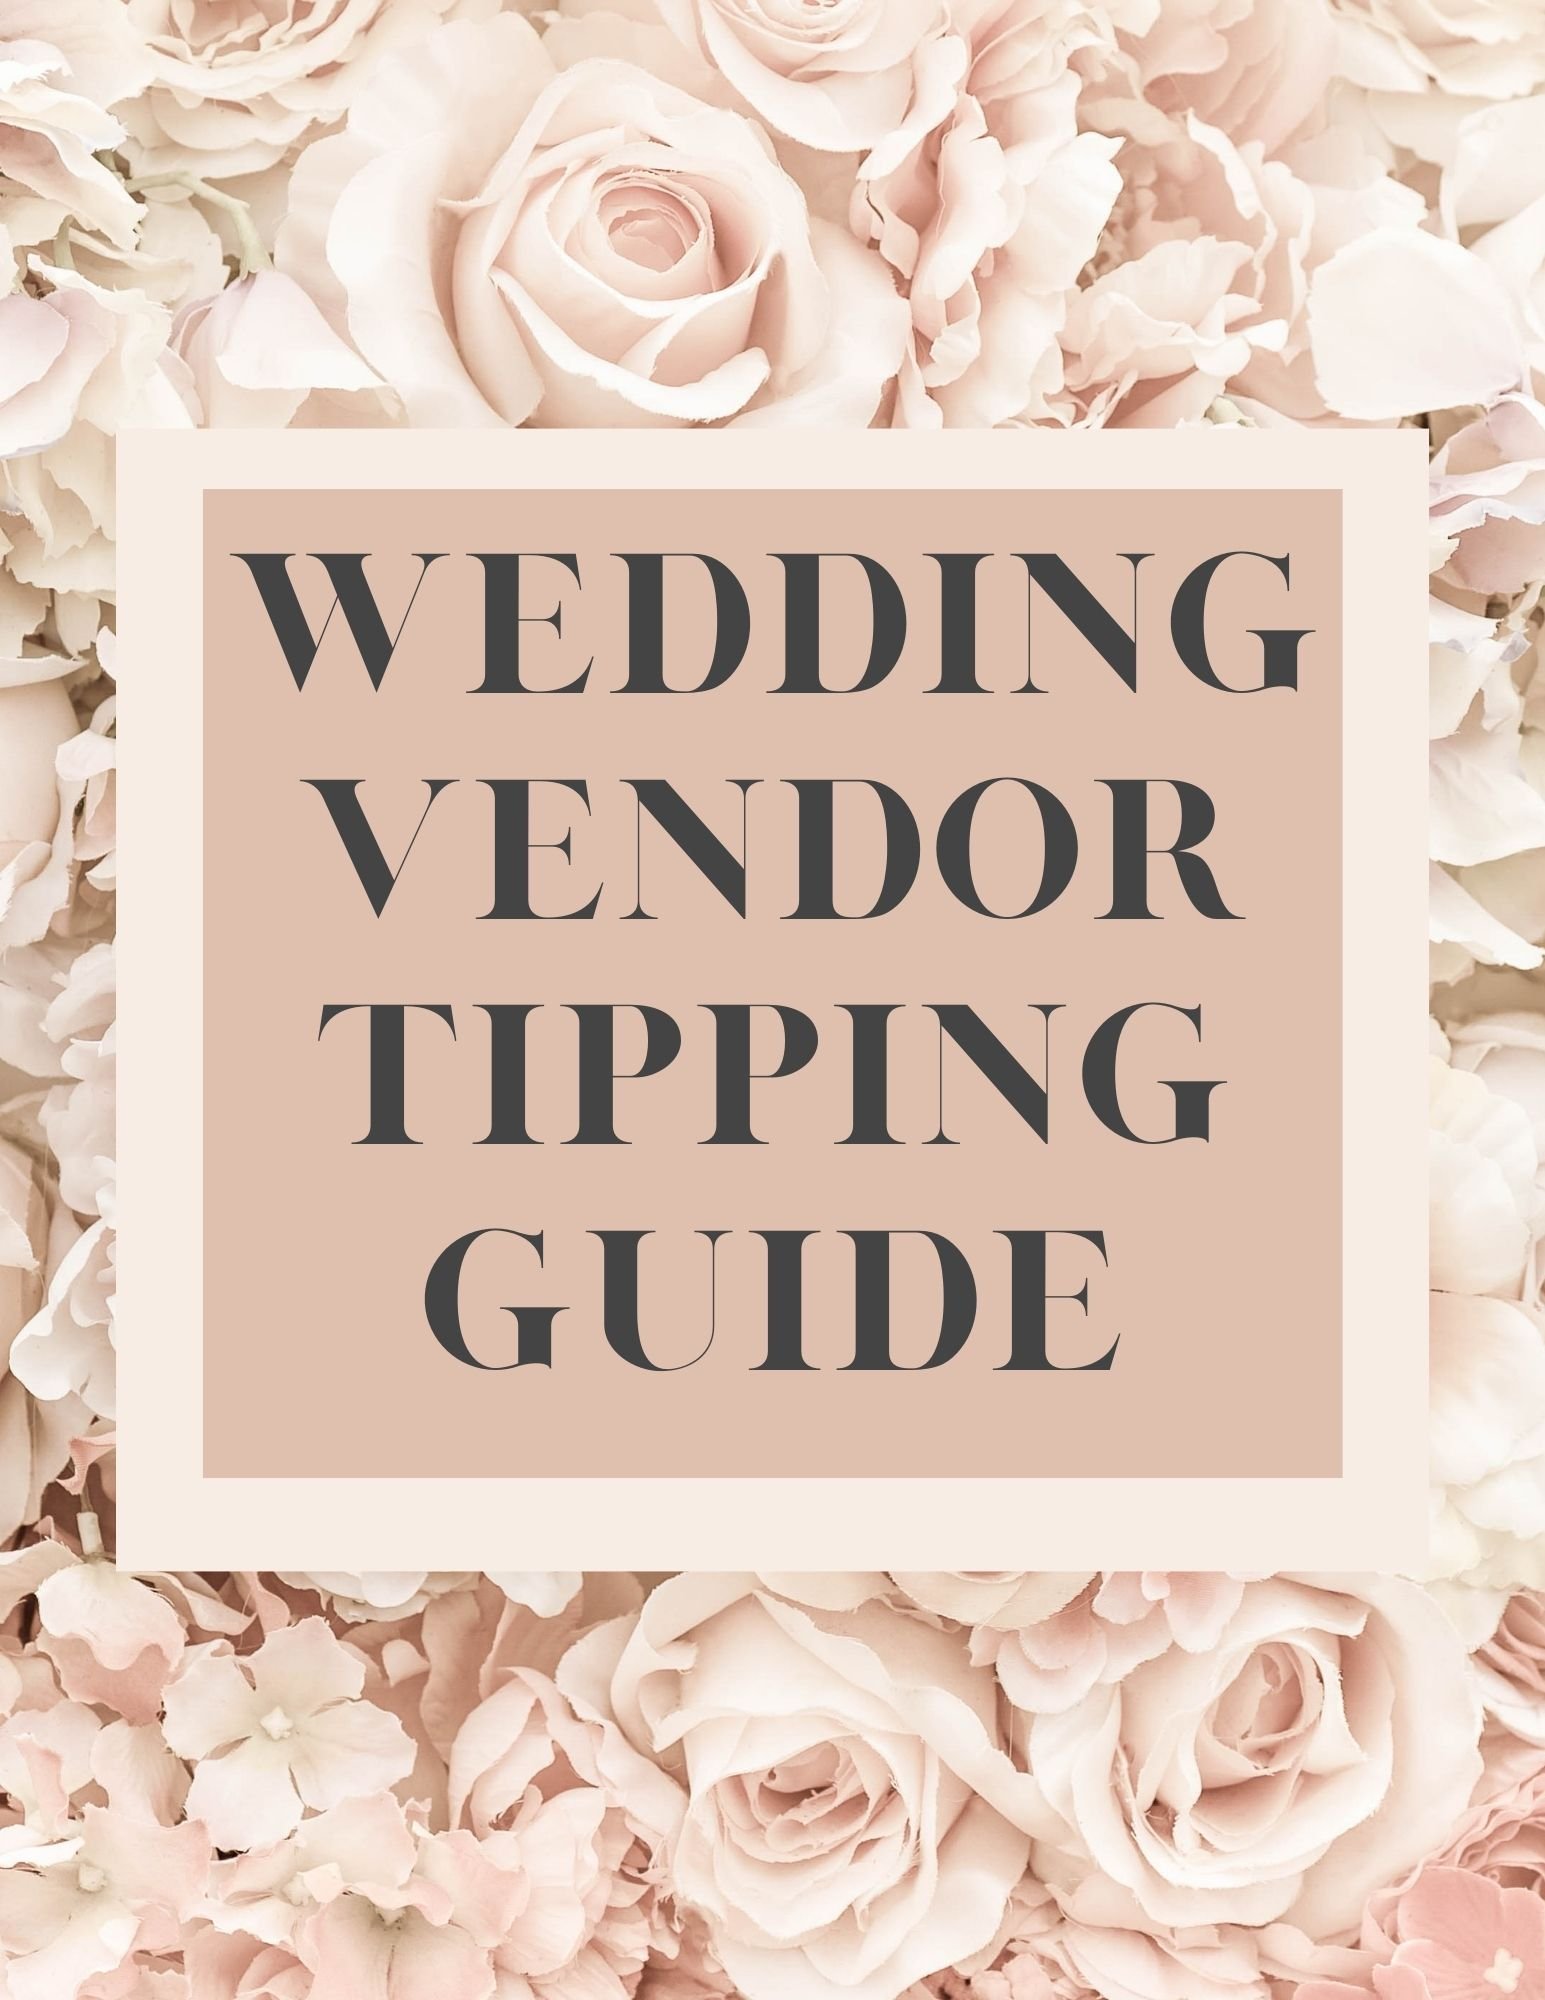 Wedding Vendor Tipping Guide.jpg